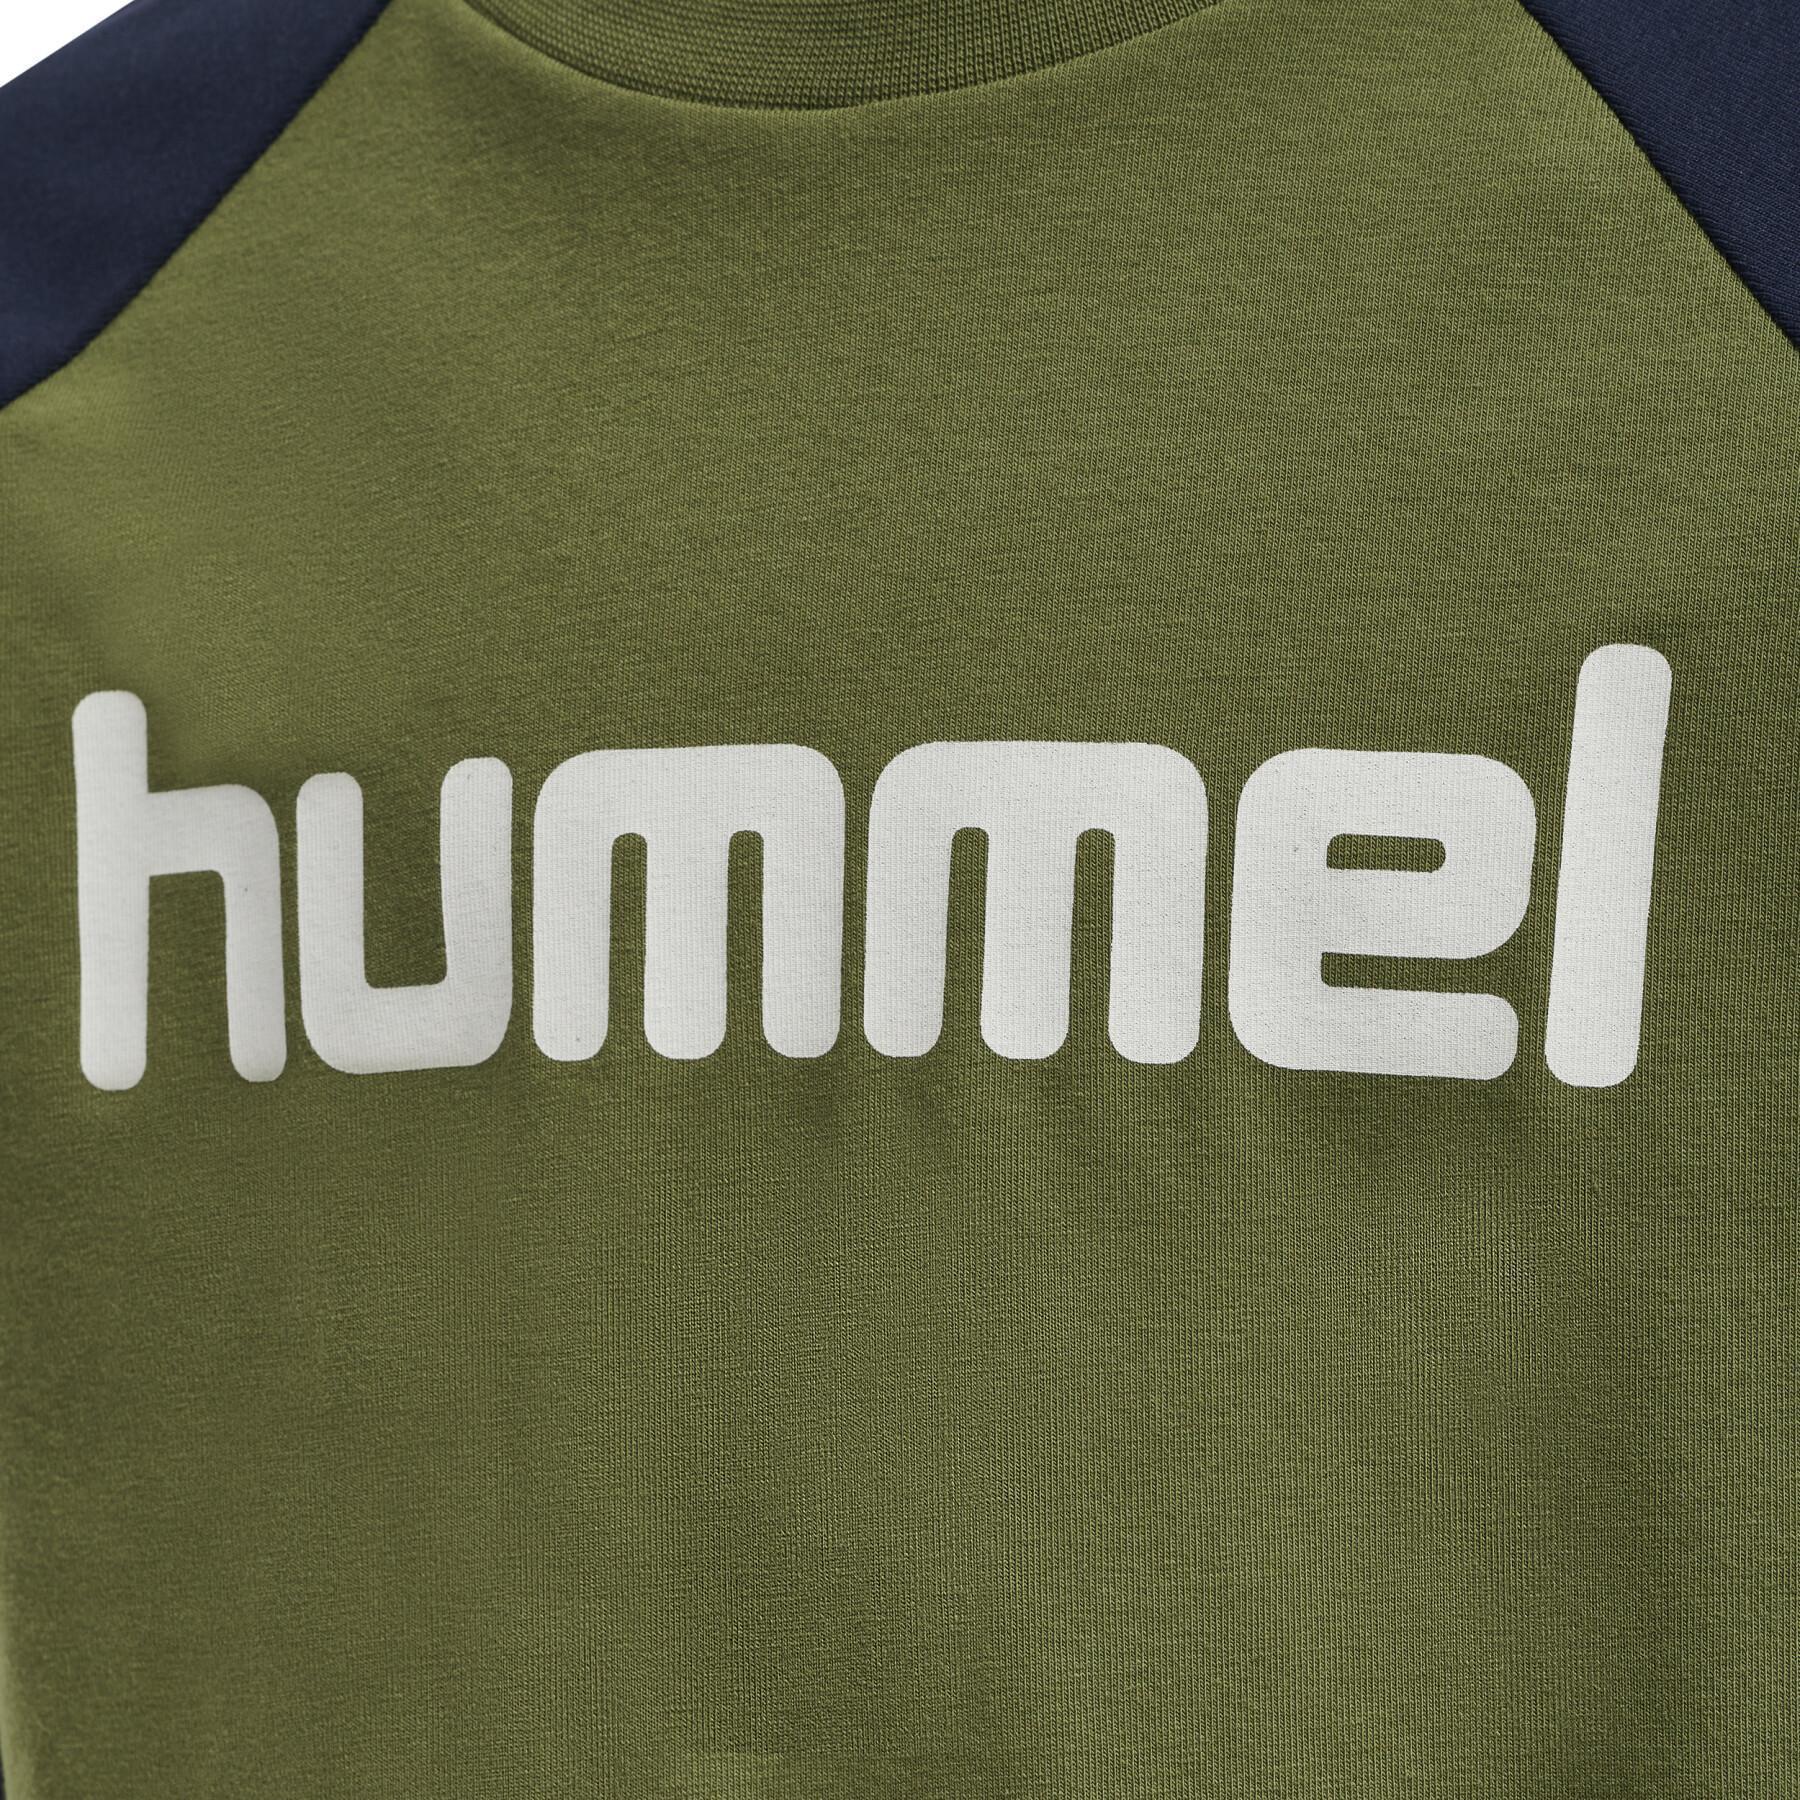 Camiseta de manga larga para niños Hummel Boys